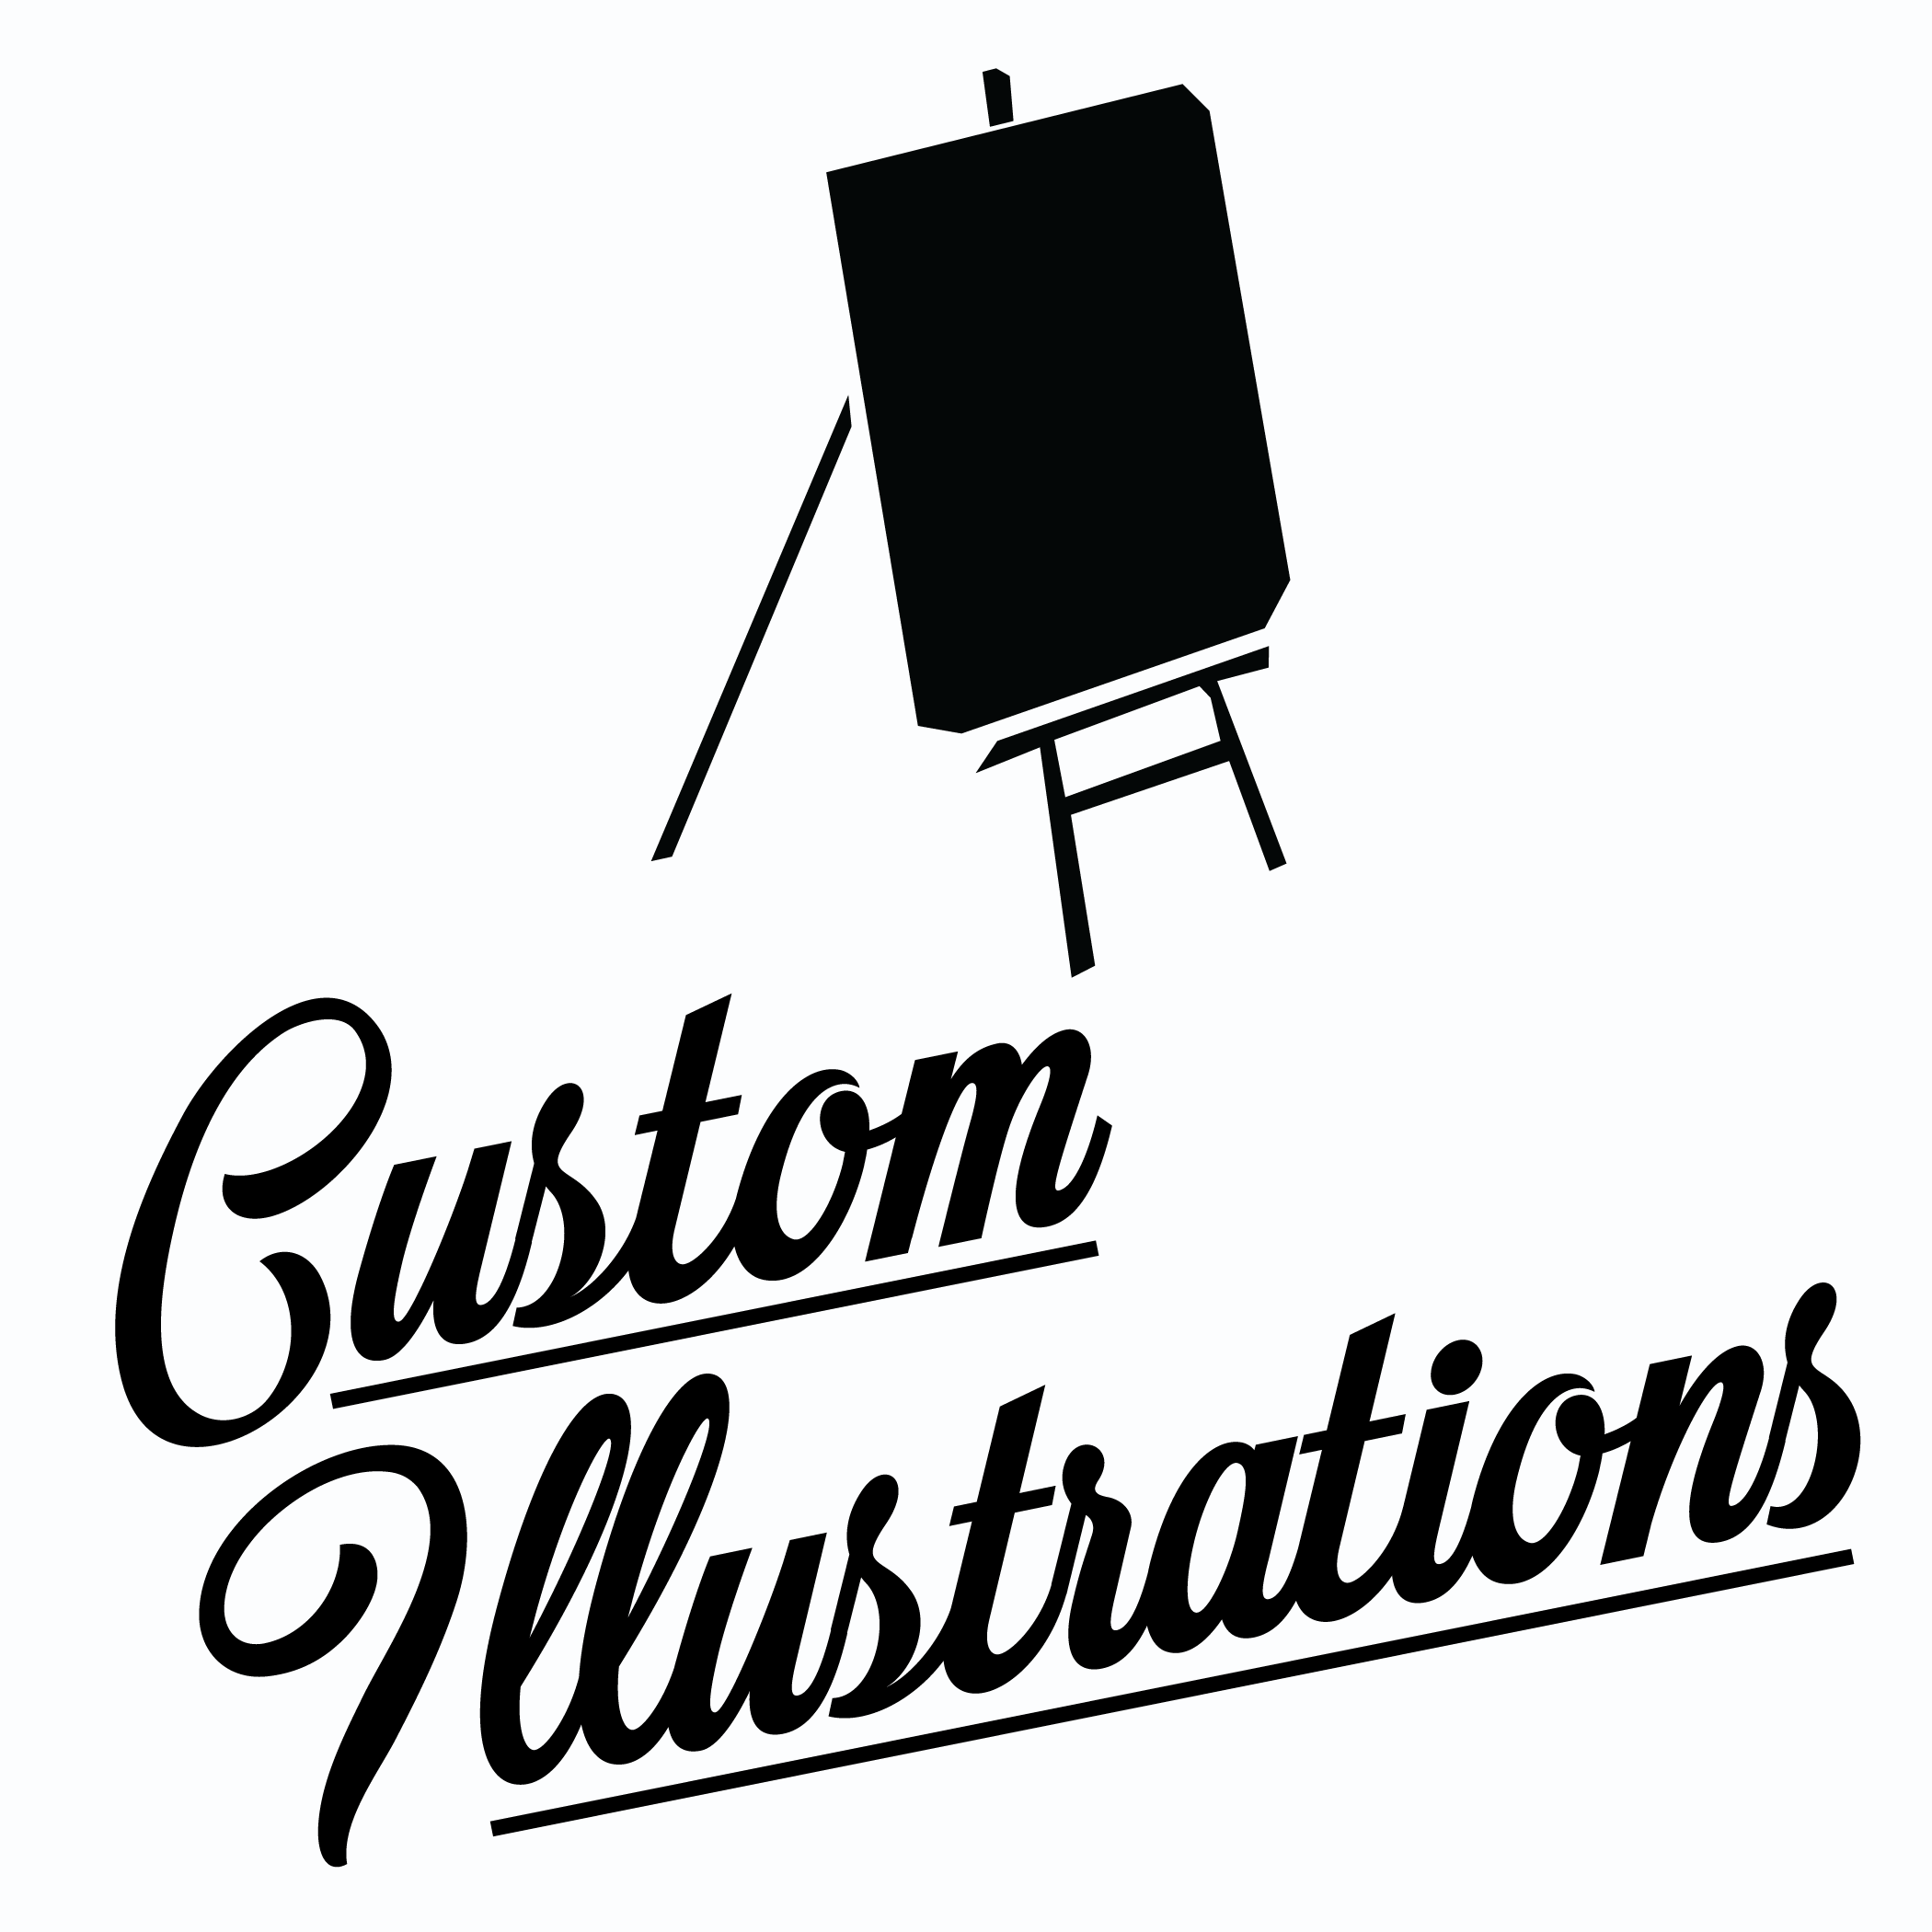 A art canvas representing illustration services.